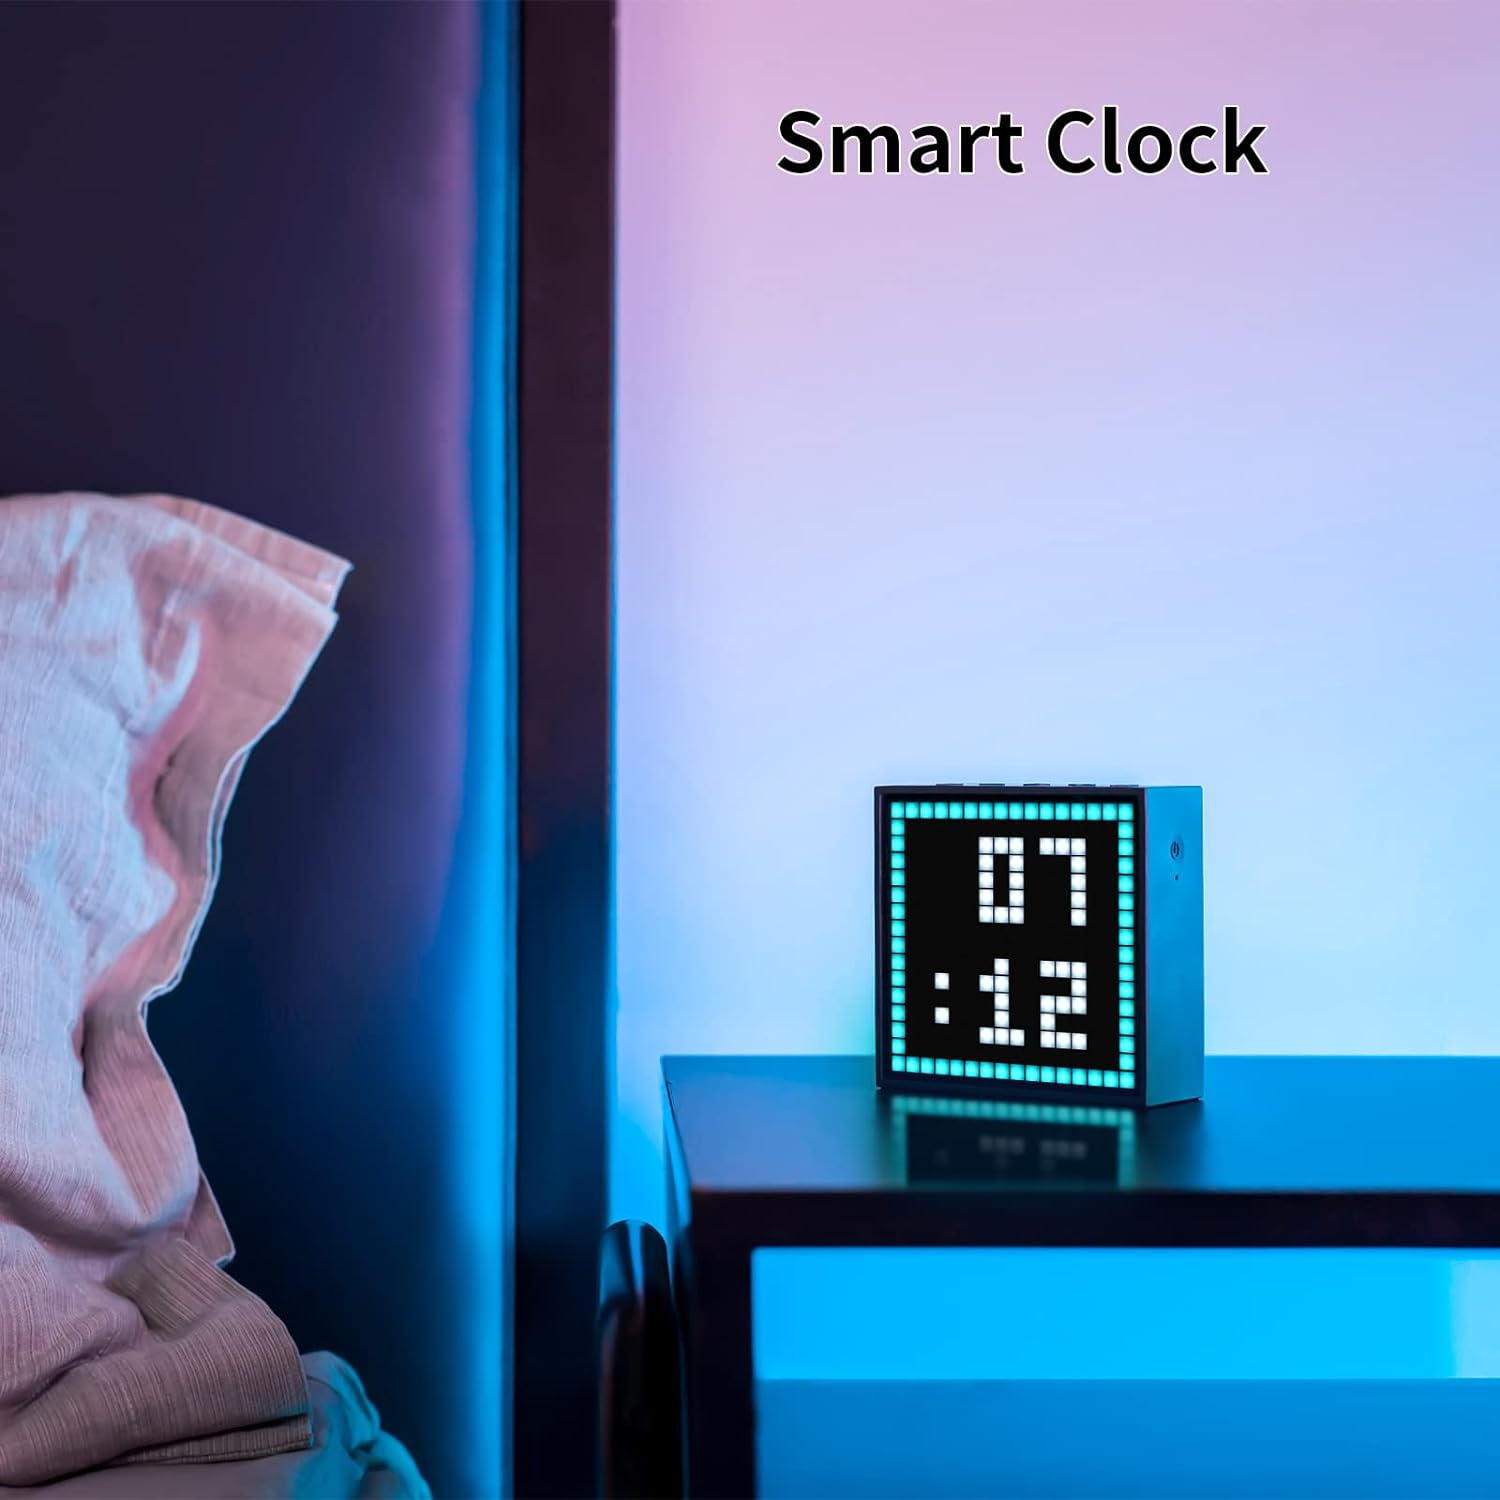 Divoom TimeBox Evo - Pixel Art Bluetooth Speaker with 16x16 LED Display APP Control - Cool Animation Frame & Gaming Room Setup & Bedside Alarm Clock- Black